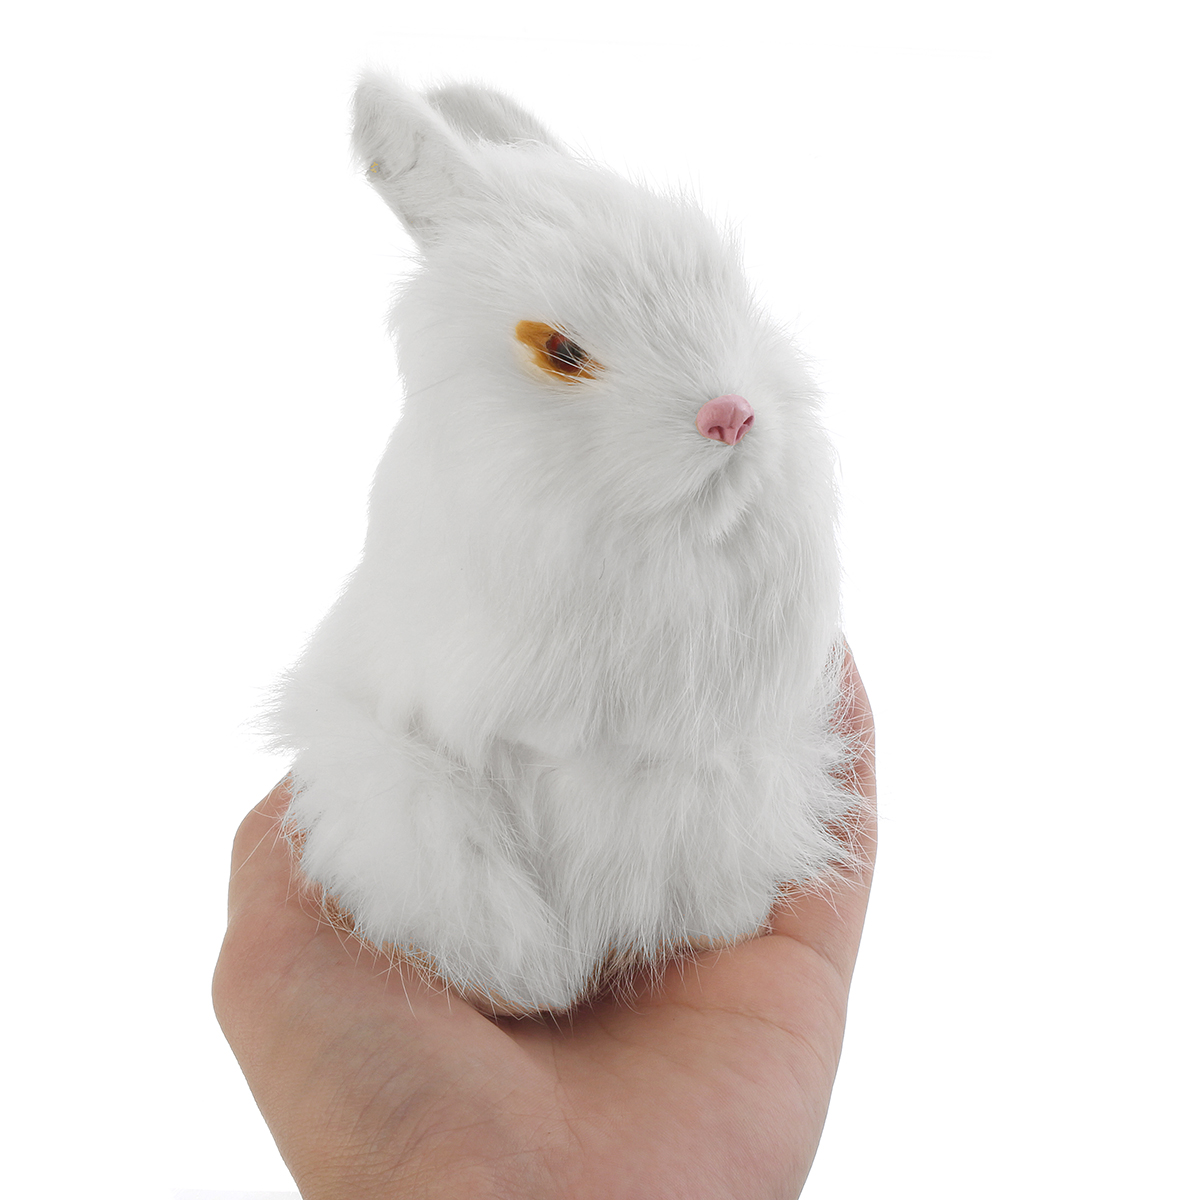 GrayYellowBrownWhite-Rabbits-Handmade-Easter-Bunnies-Home-Decorations-Desktop-Ornament-1452976-10